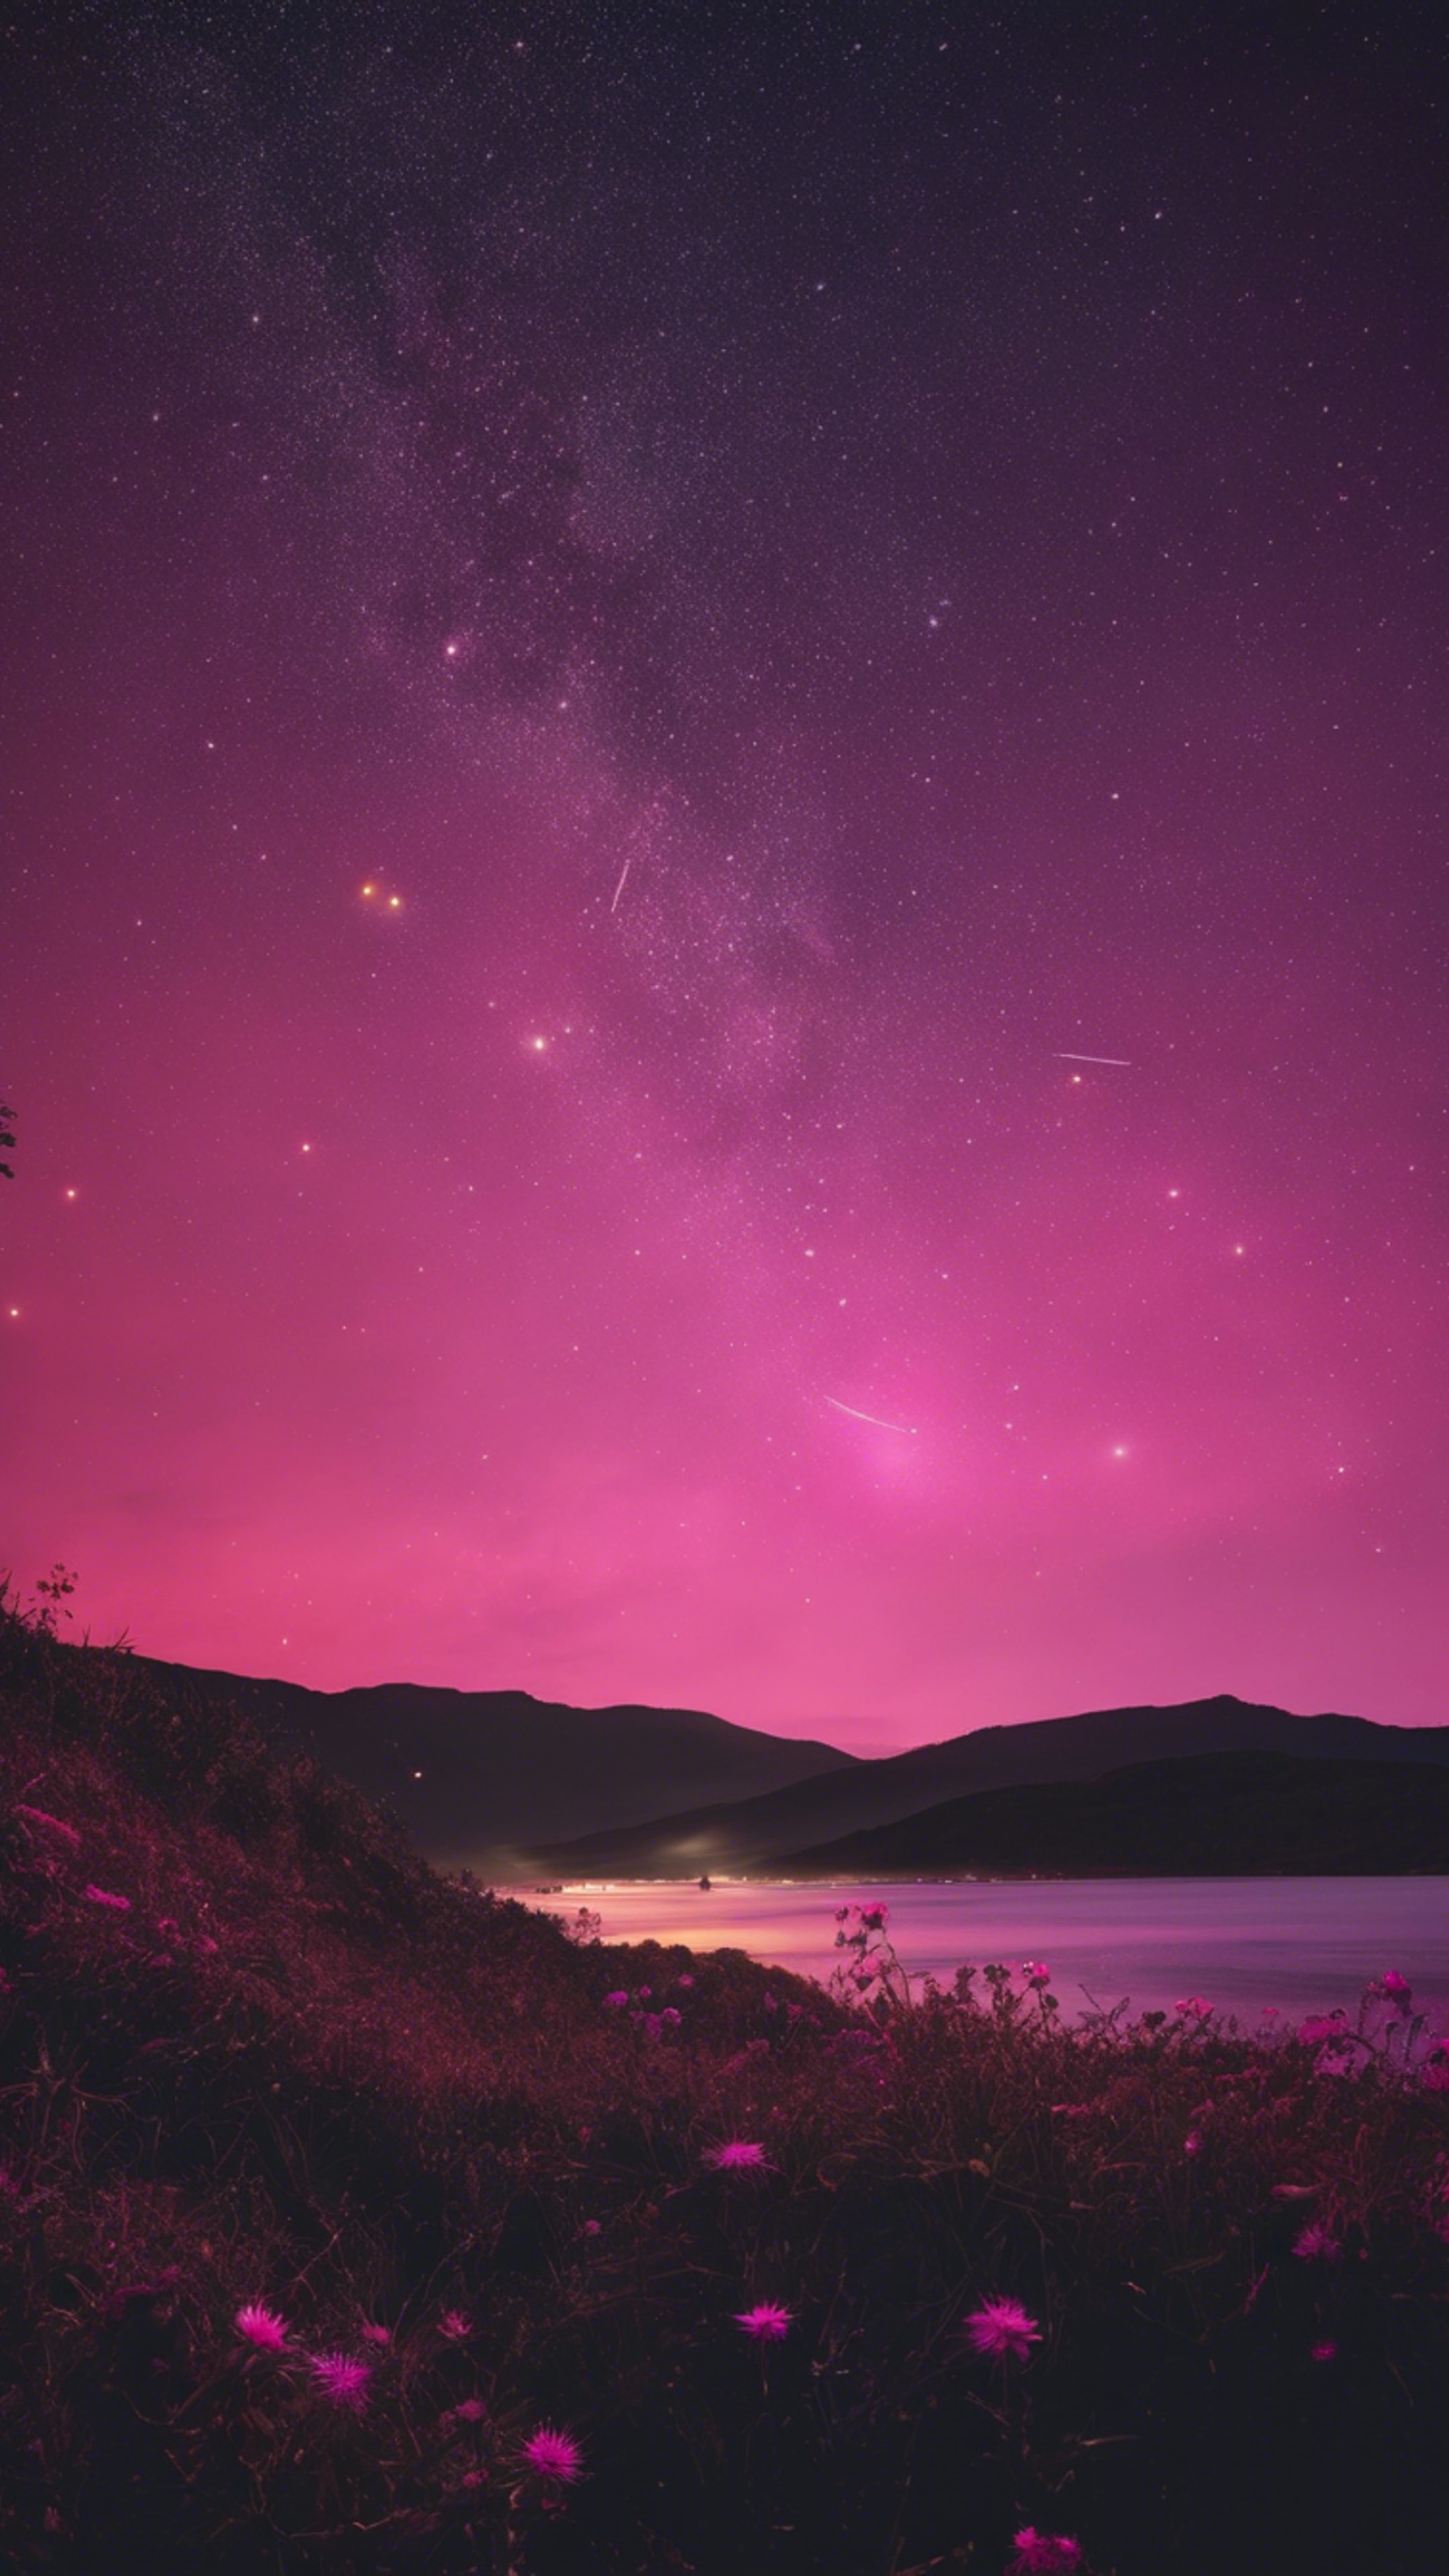 A shooting star glowing in a vibrant pink as it crosses the dark night sky. duvar kağıdı[c8fce7a9134e4e29a83b]